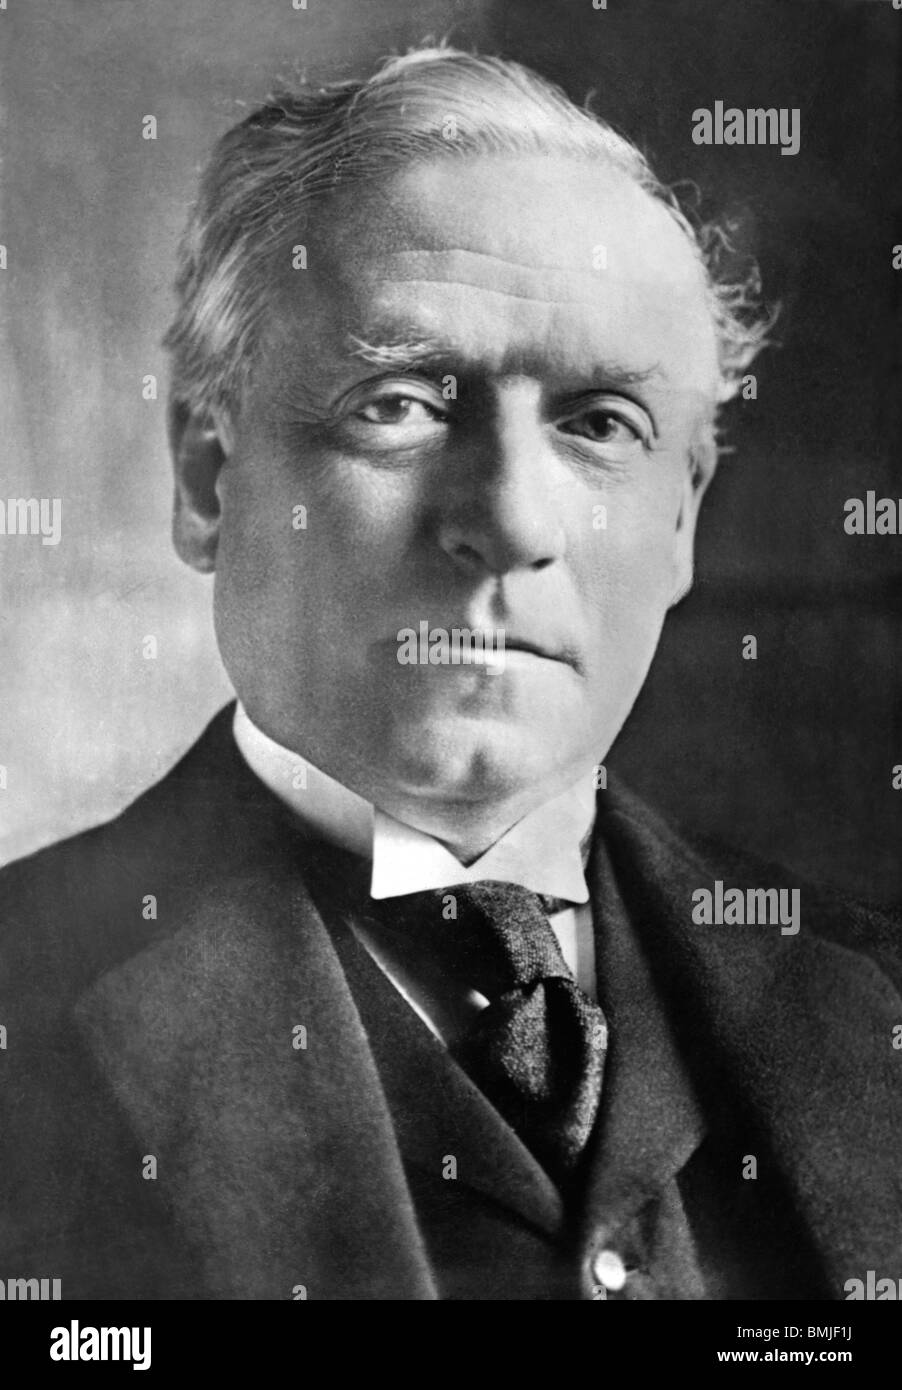 Foto retrato sin fecha de Herbert Henry ASQUITH (1852 - 1928) - El Primer Ministro Liberal del Reino Unido desde 1908 a 1916. Foto de stock